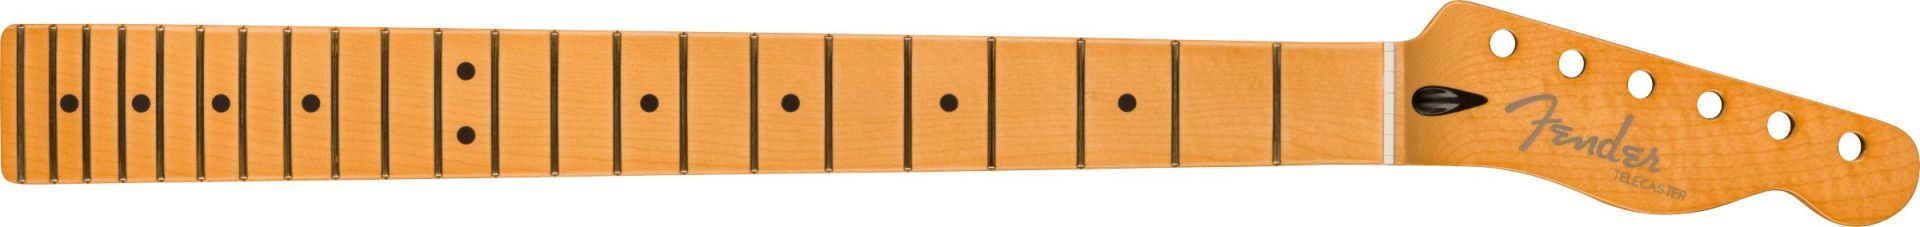 Fender Player Plus Telecaster Neck 12 Radius 22 Medium Jumbo Frets Maple Fingerboard